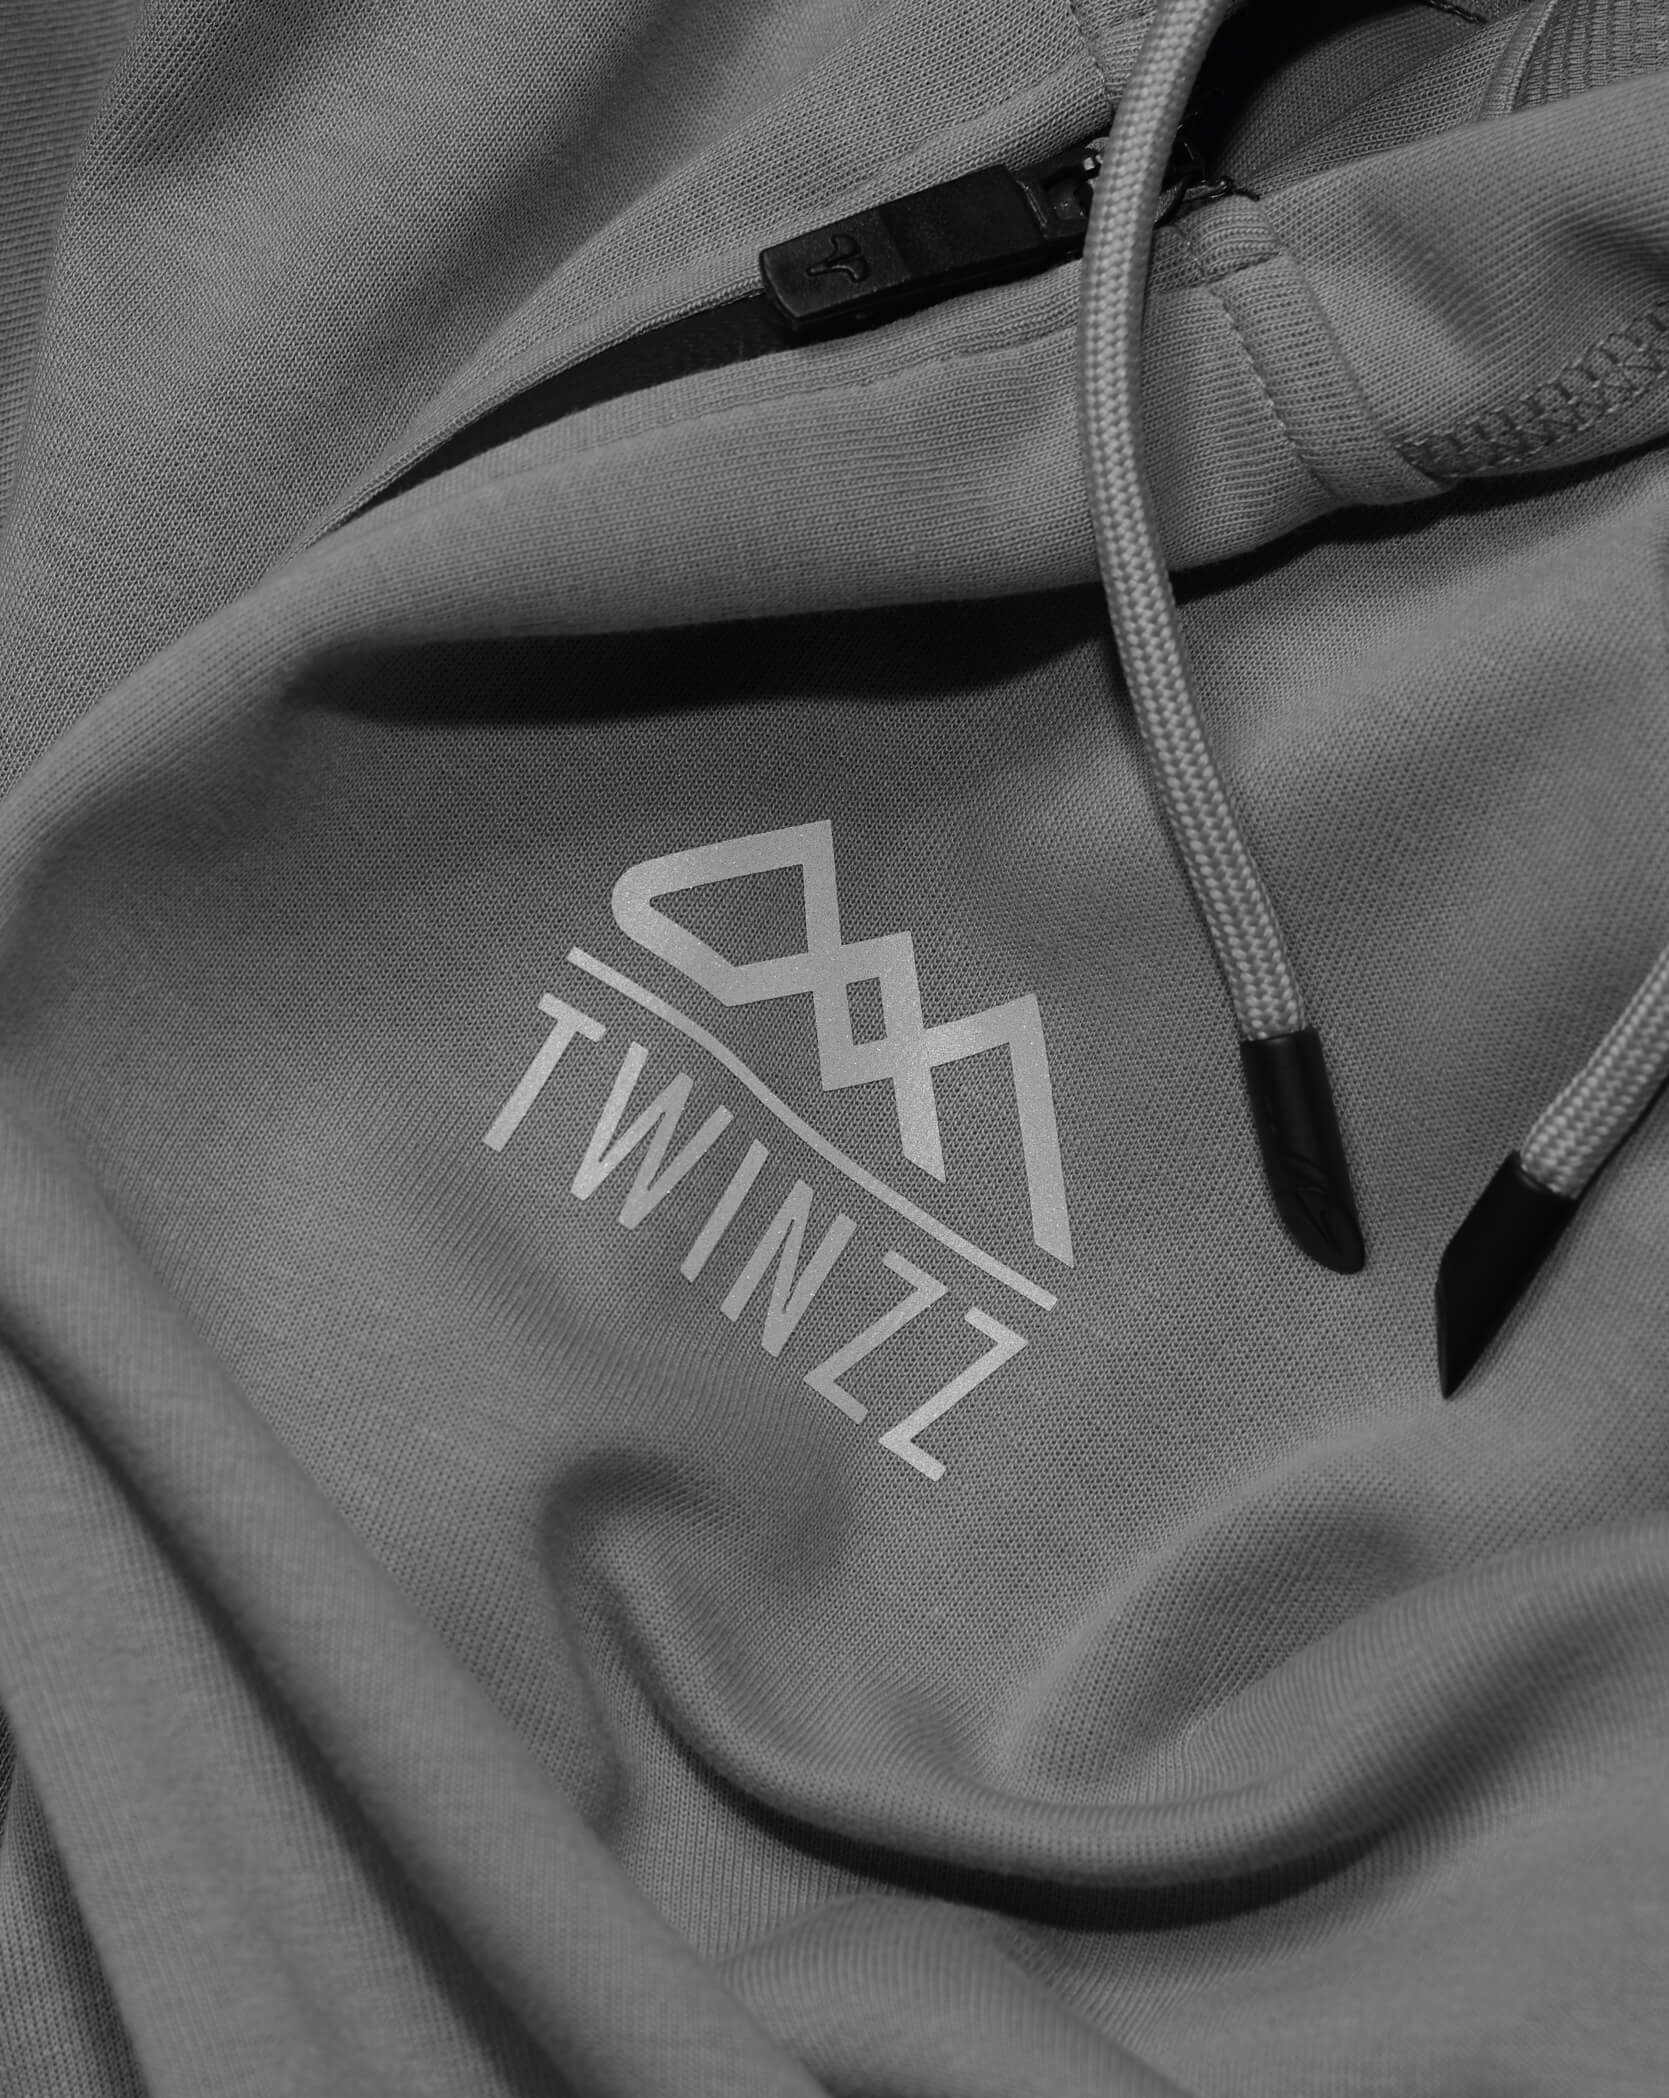 Twinzz grey tech hoodie logo